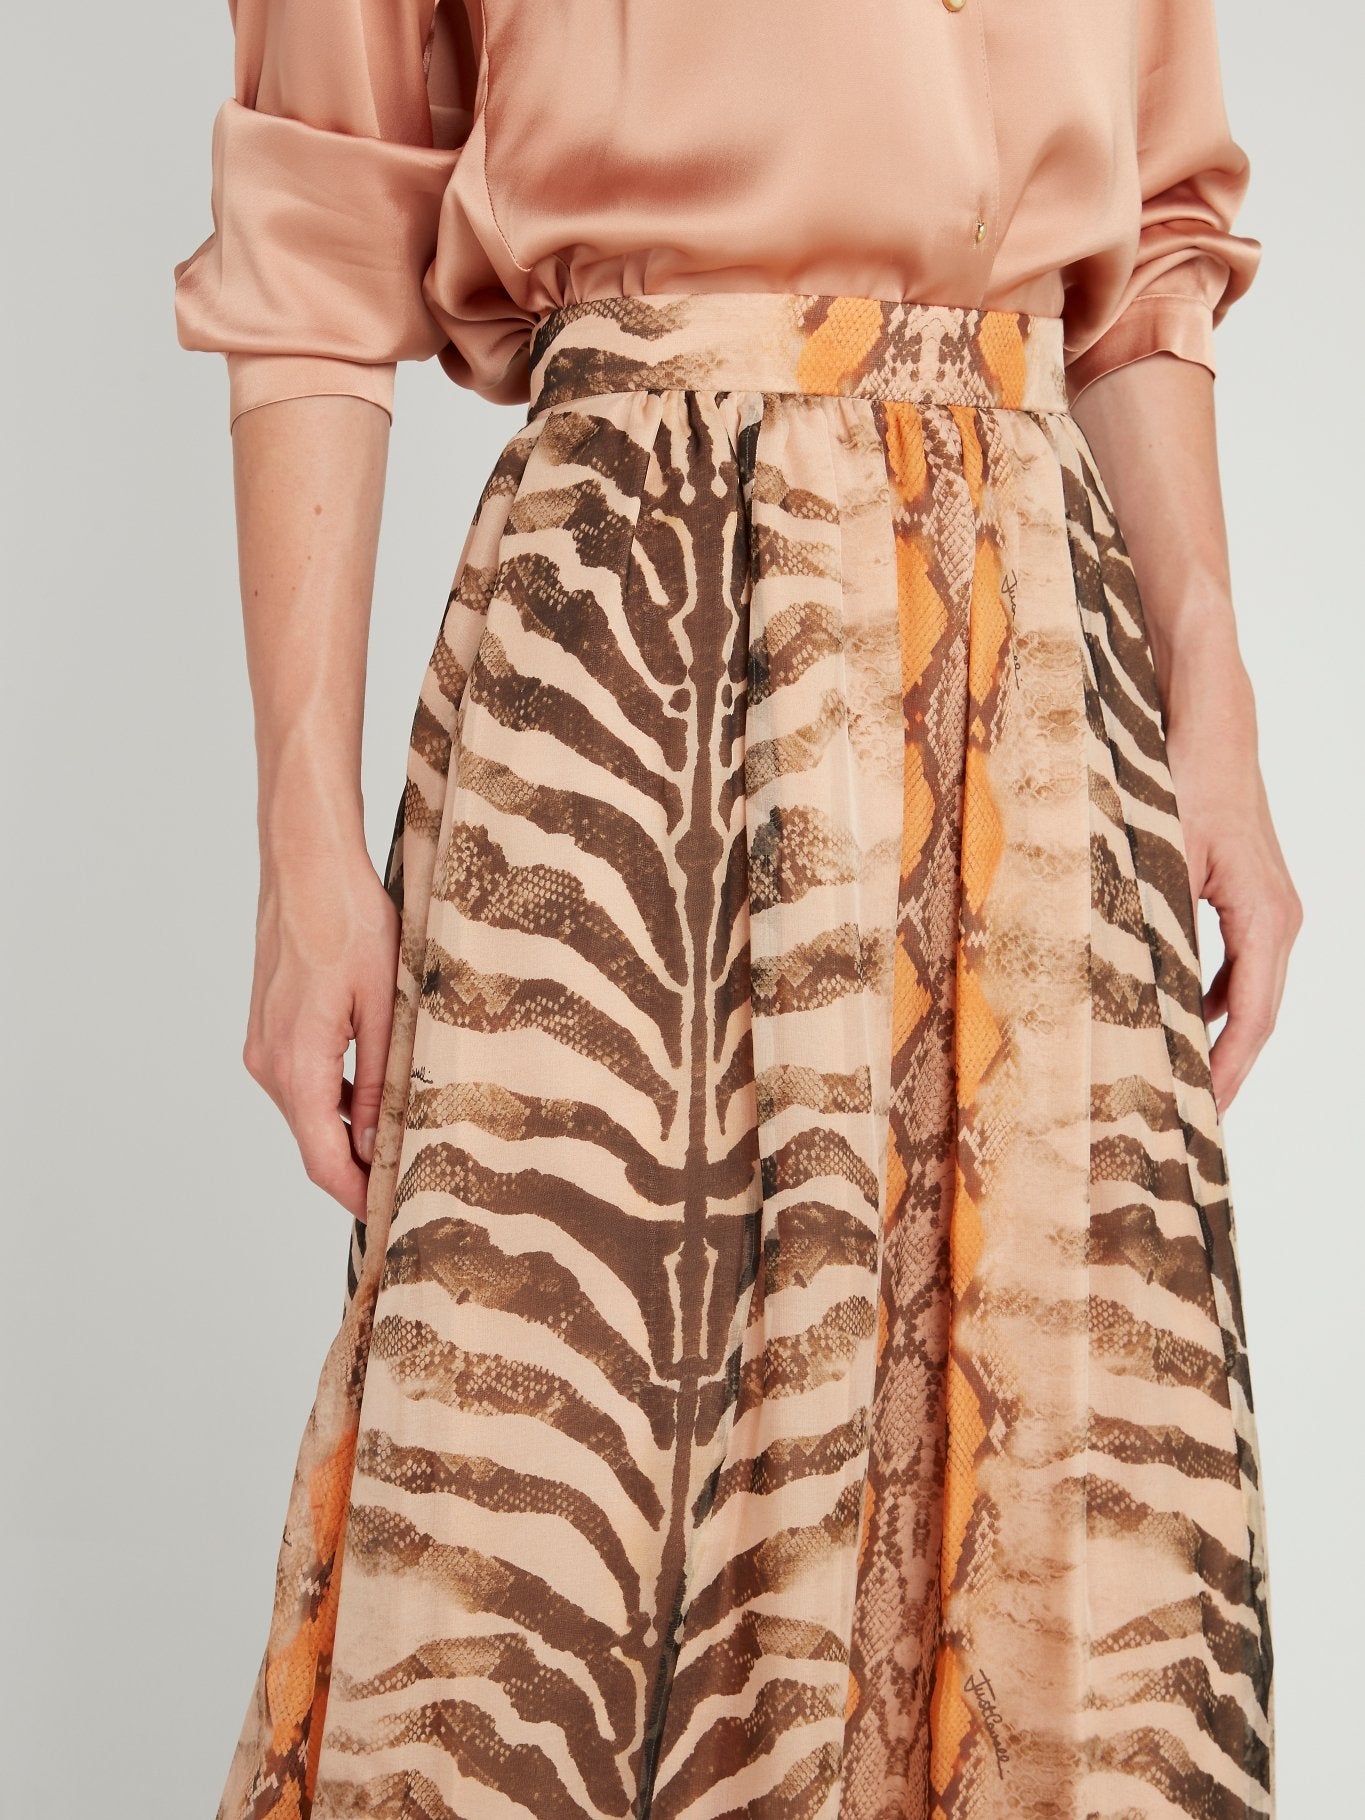 Beige Animal Print Silk Skirt